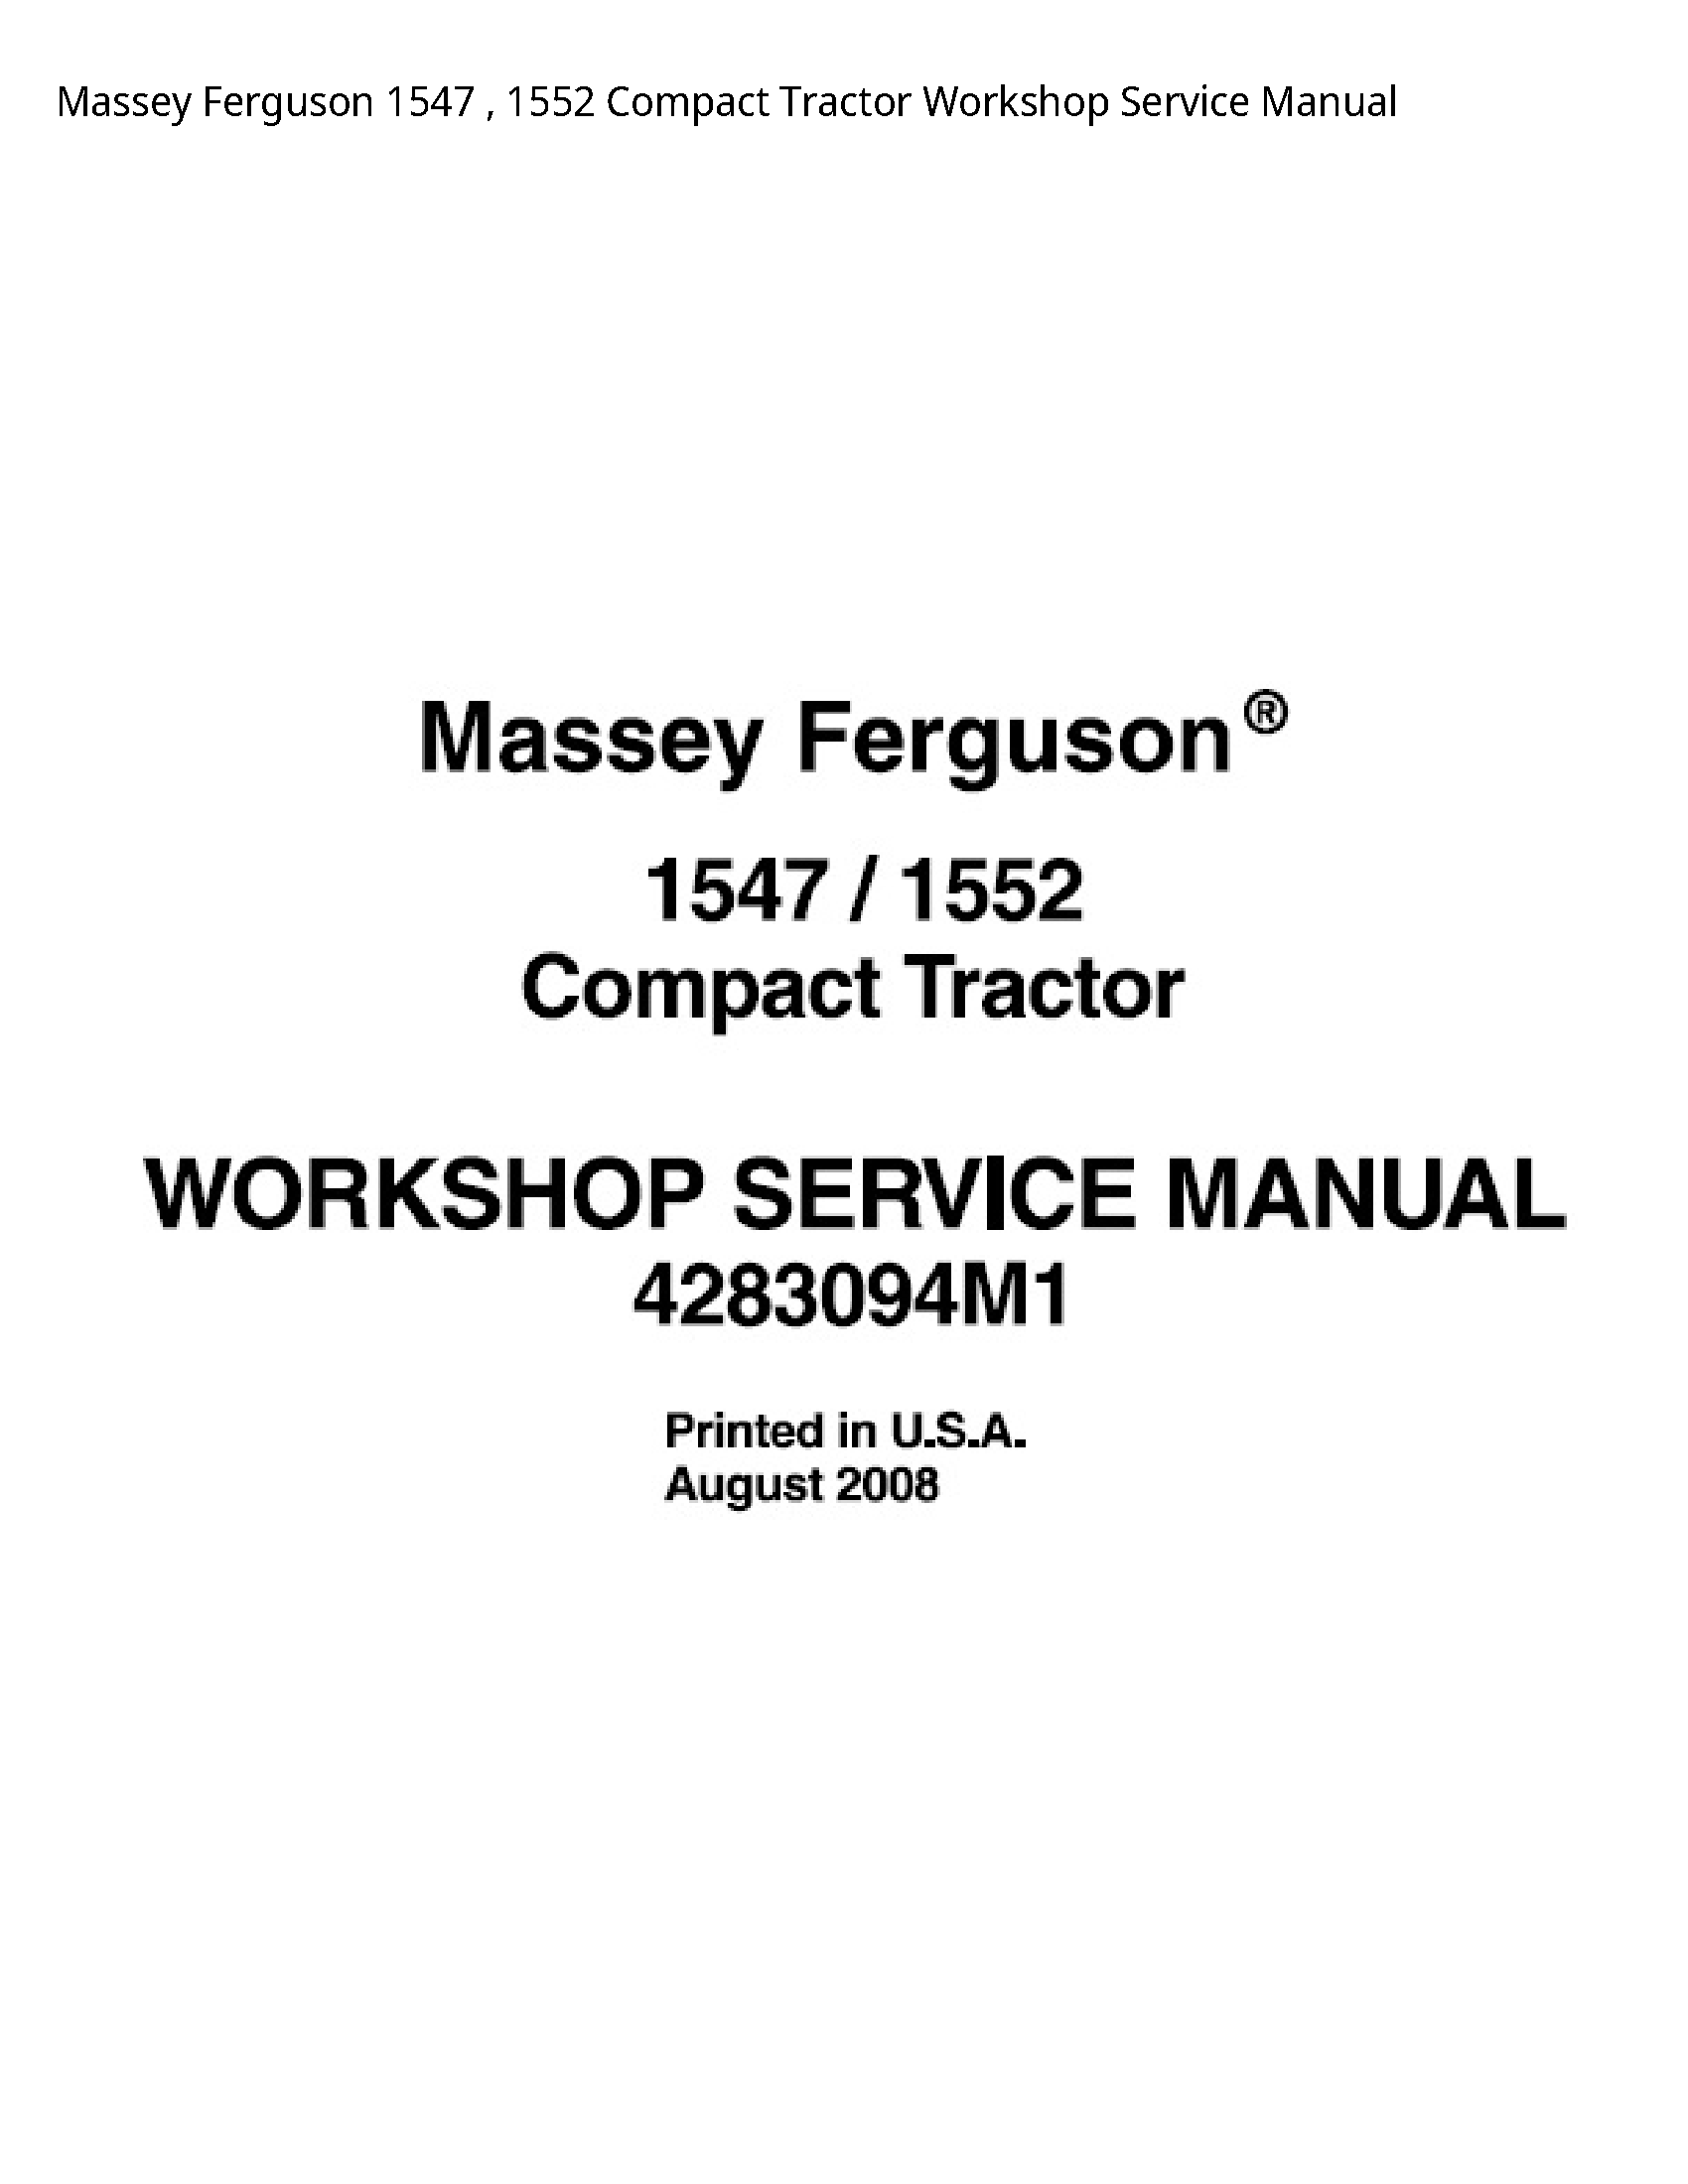 Massey Ferguson 1547 Compact Tractor Service manual